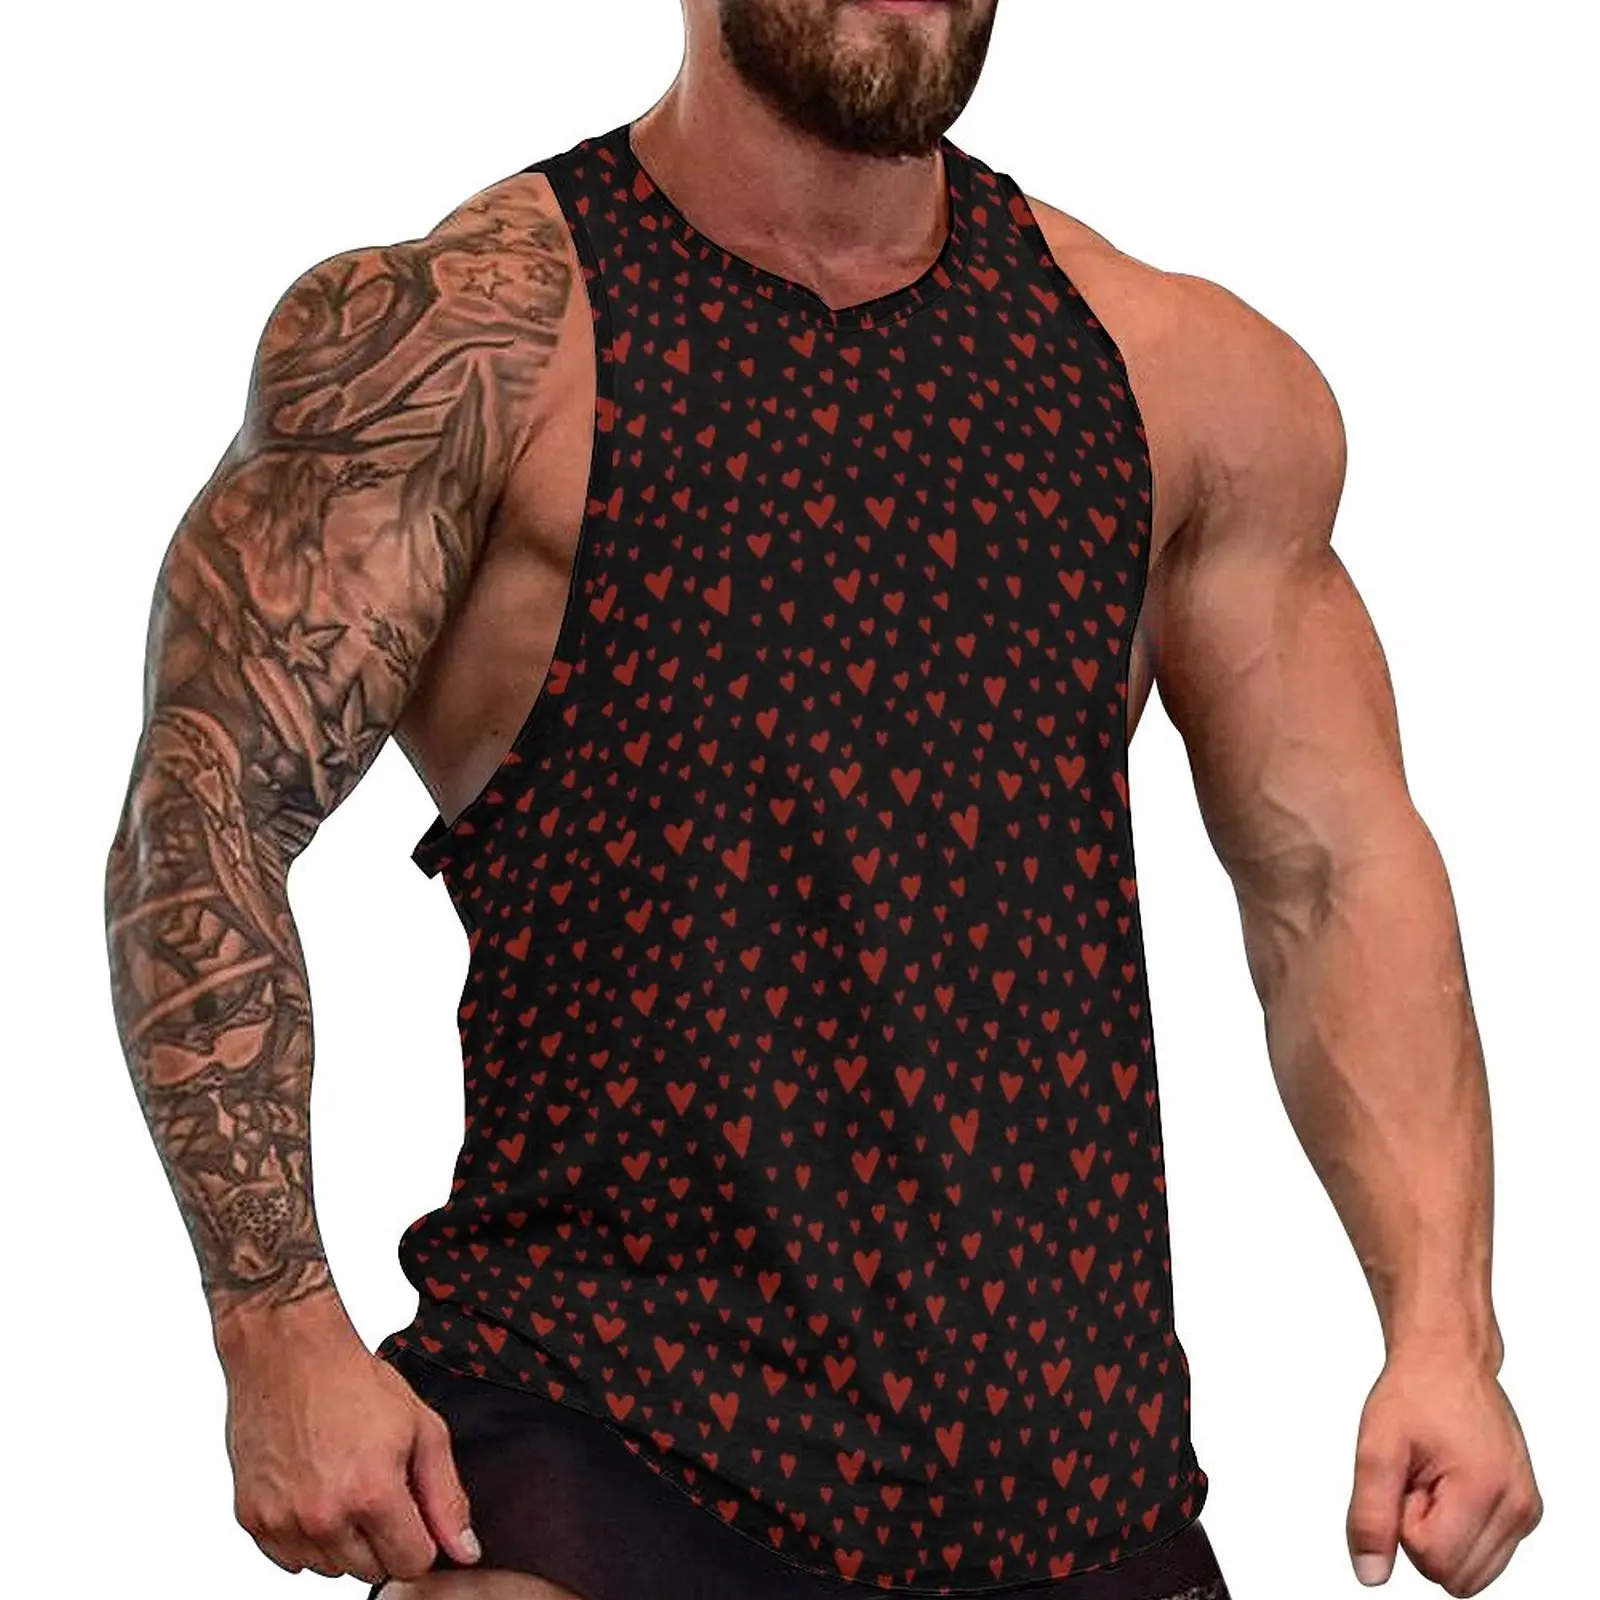 

Red Hearts Tank Top Man's Love Valentine Tops Summer Design Gym Trendy Oversized Sleeveless Vests